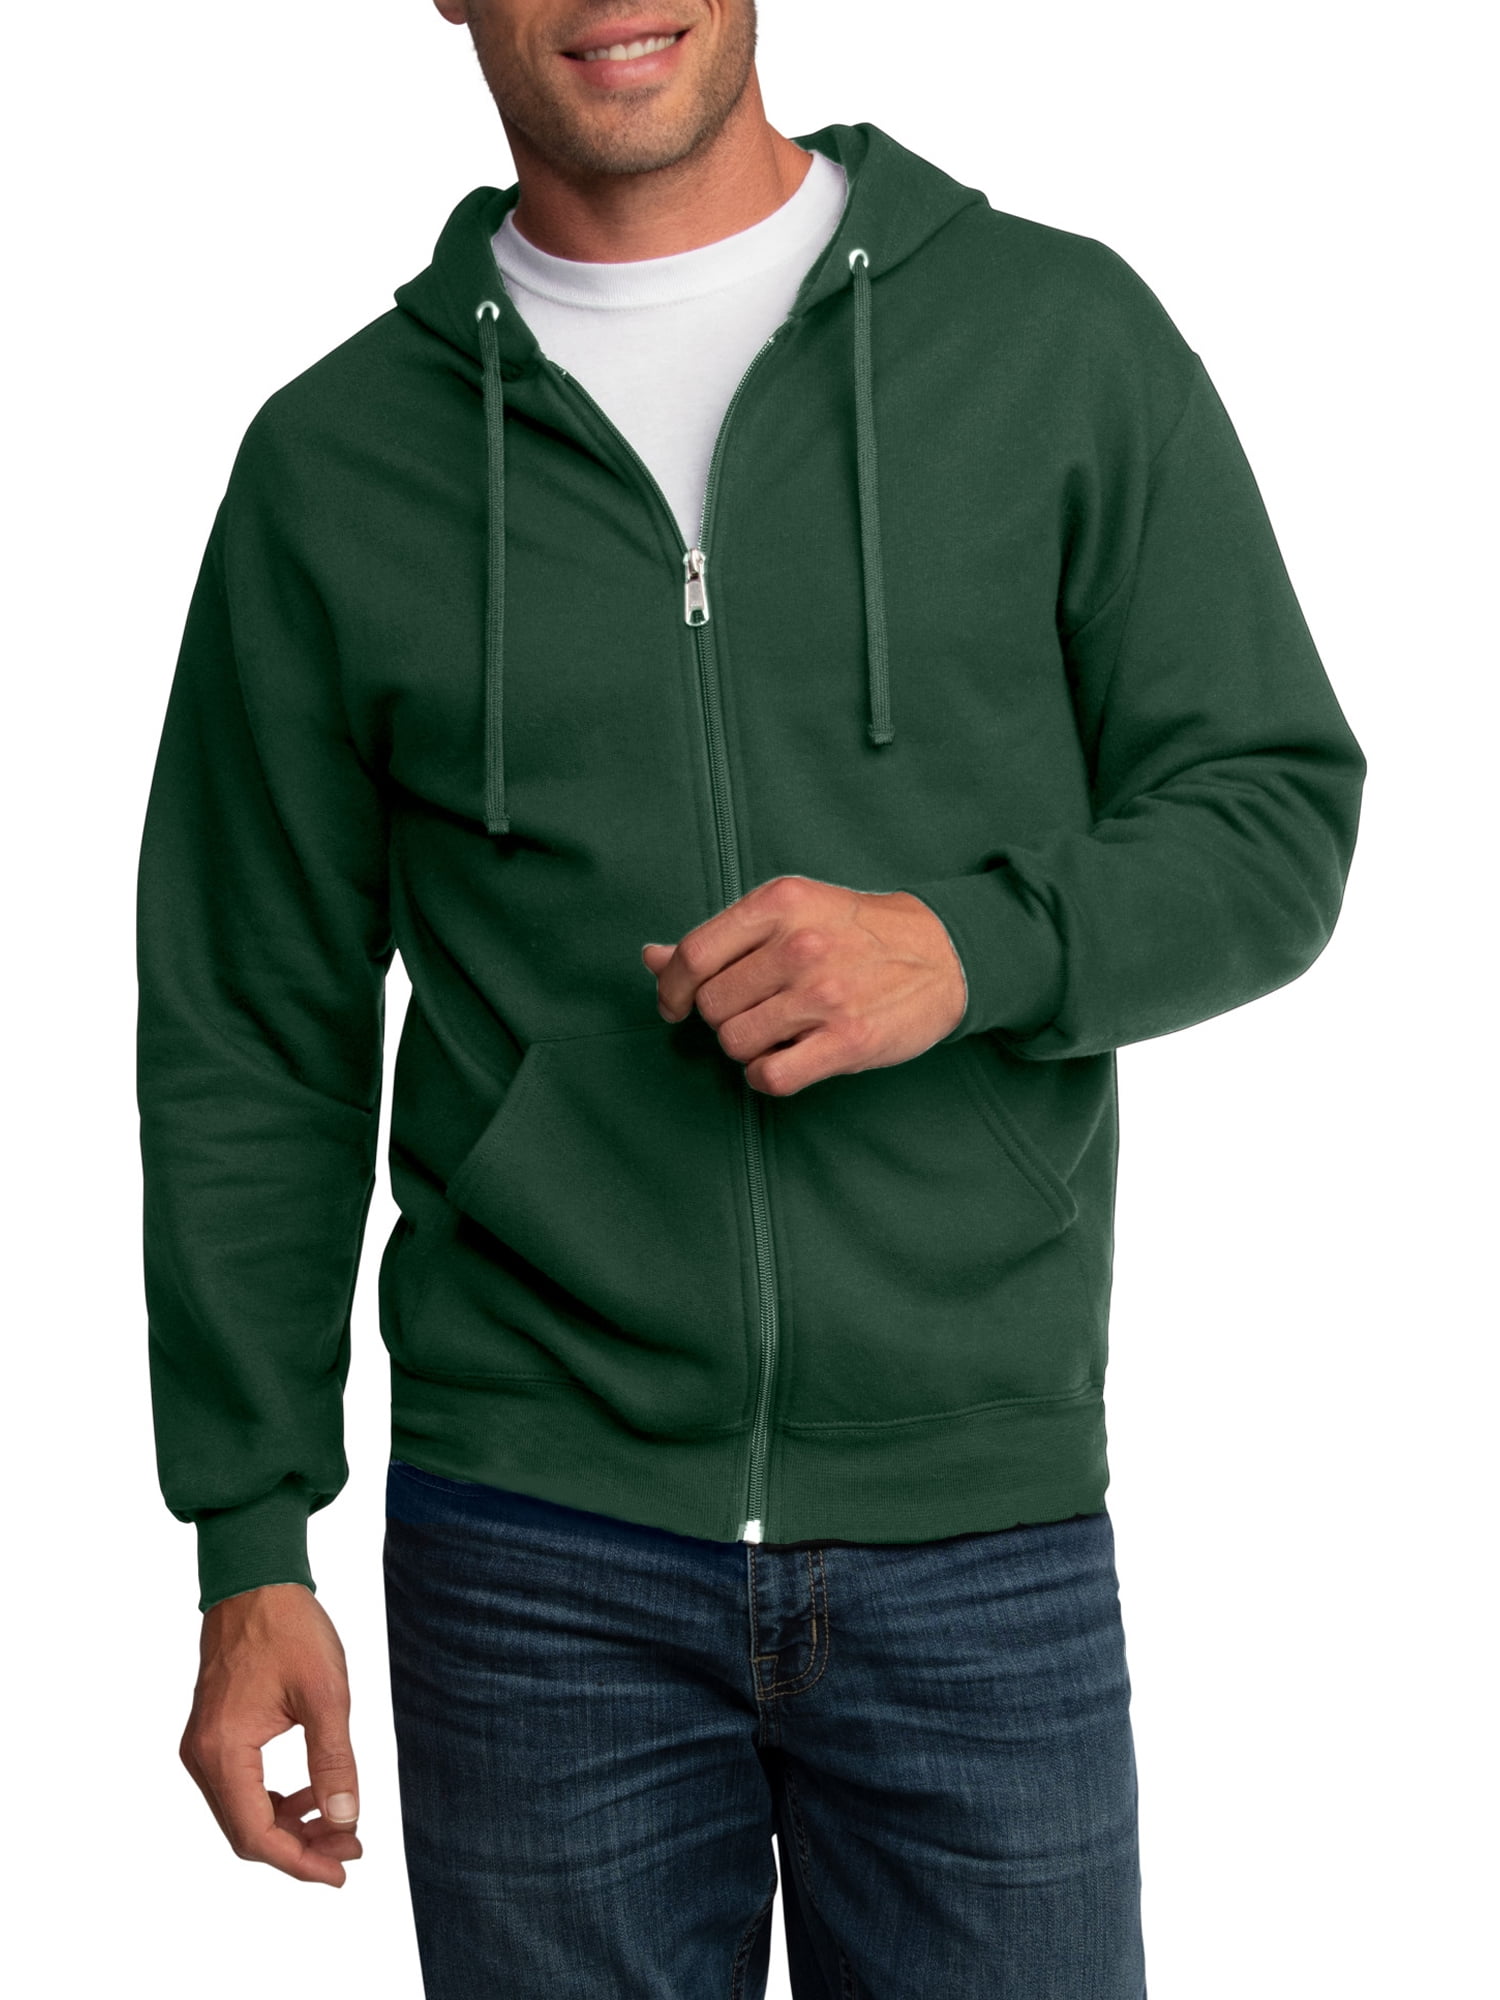 Macondoo Men Sport Zipper Hooded Casual Jacket Coat Solid Sweatshirt